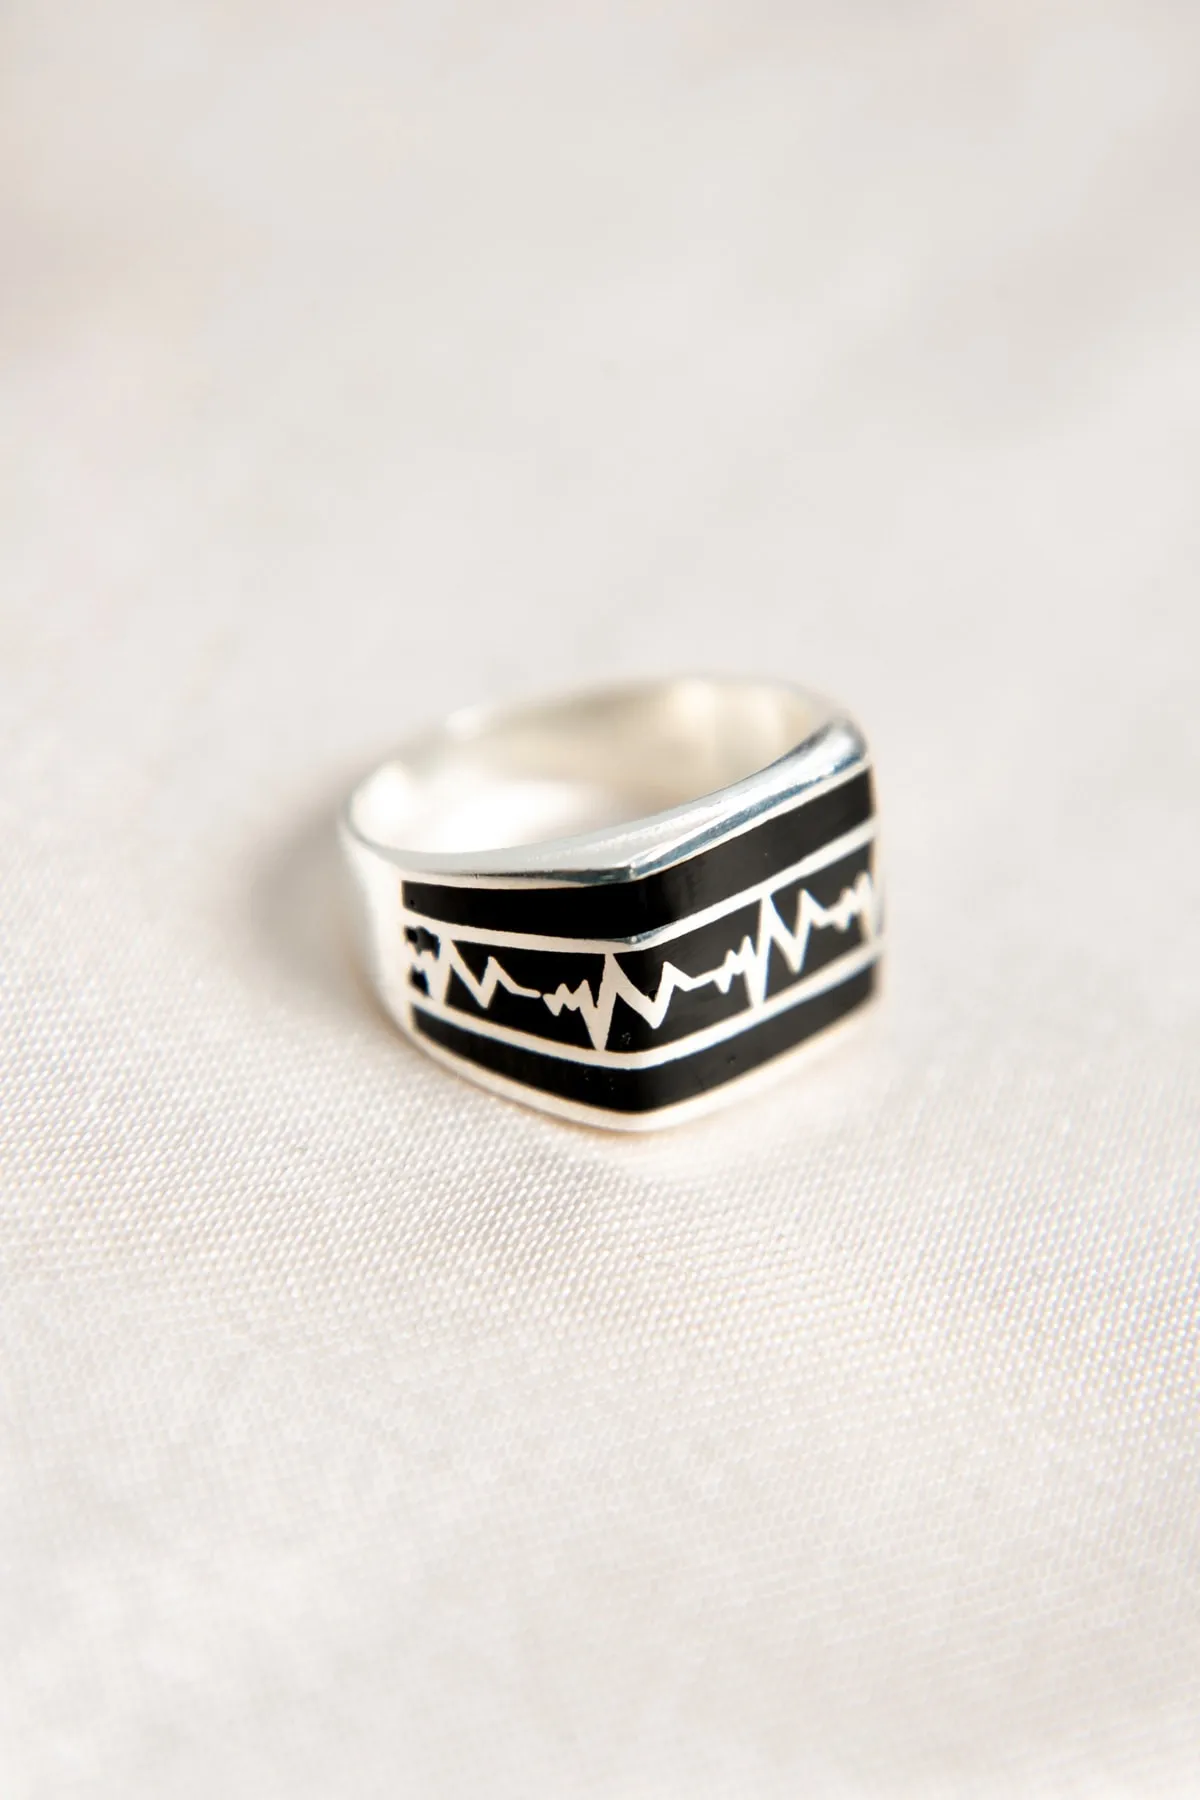 Мужское кольцо - сердцебиение (серебро) elkmd50130 Larin Silver#3